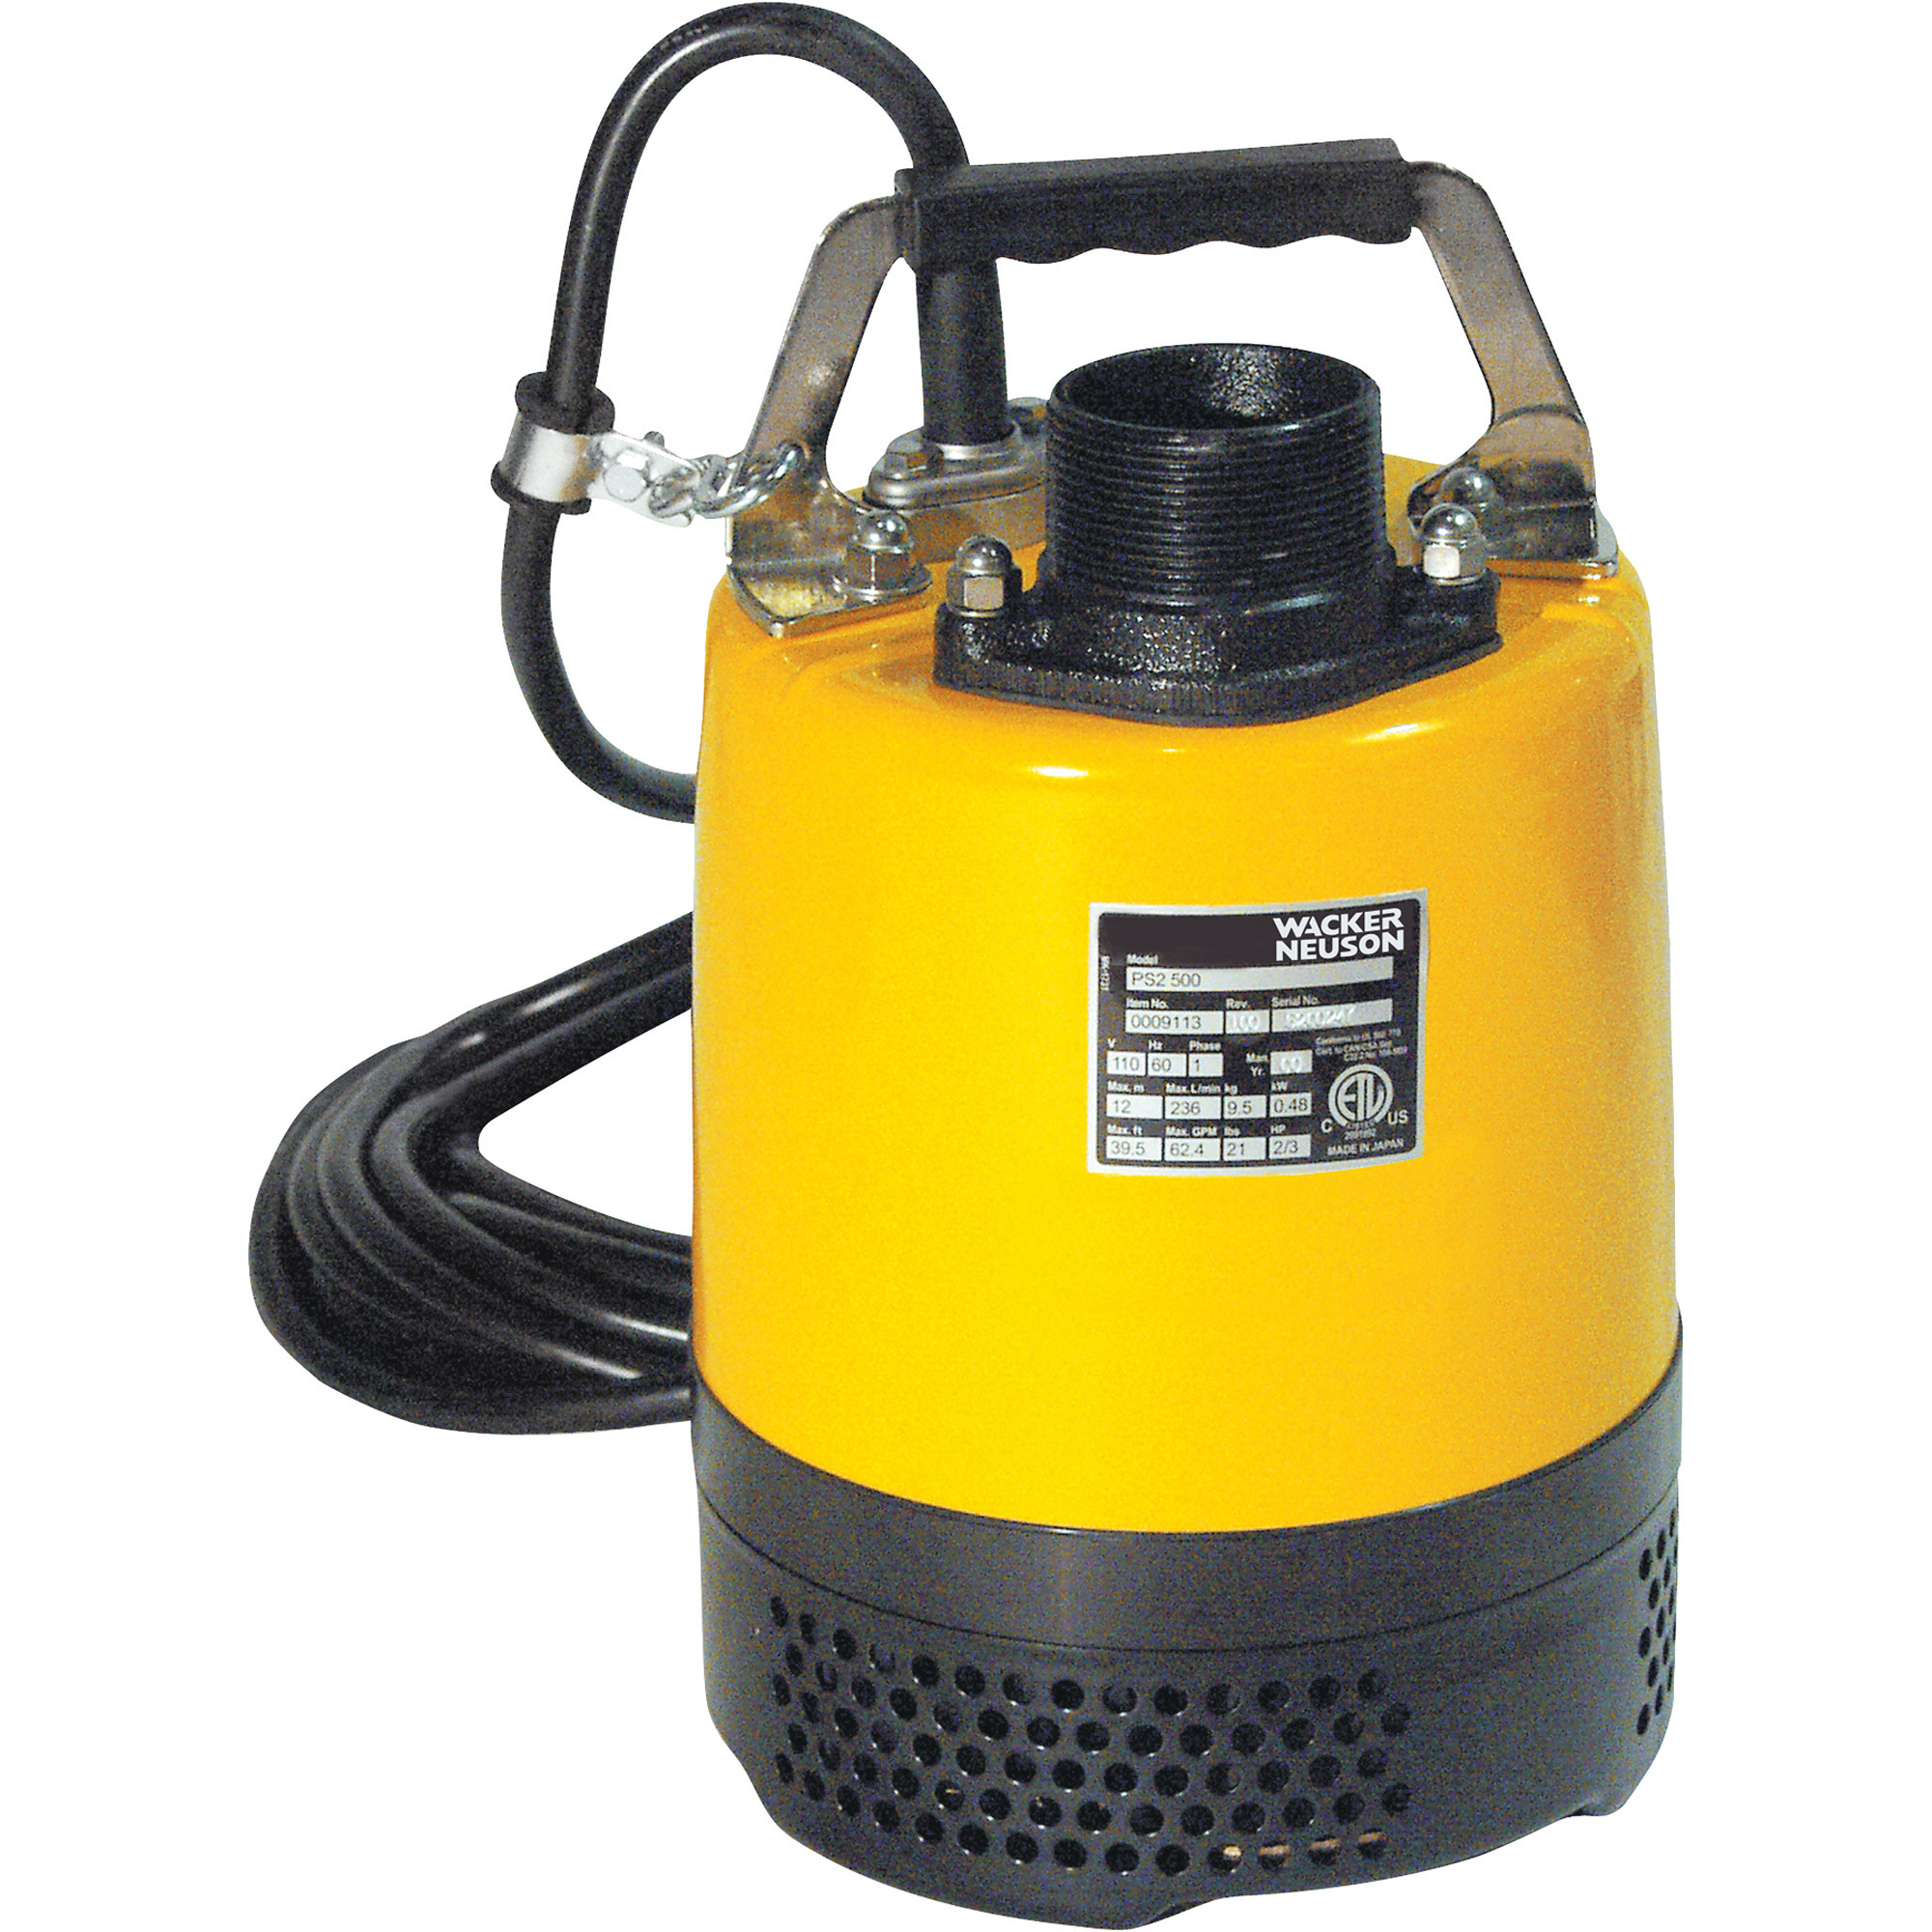 Wacker Neuson Submersible Utility Water Pump, 3744 GPH, 2/3 HP, Model PS2 500-PUMP SUB. 110V/60HZ